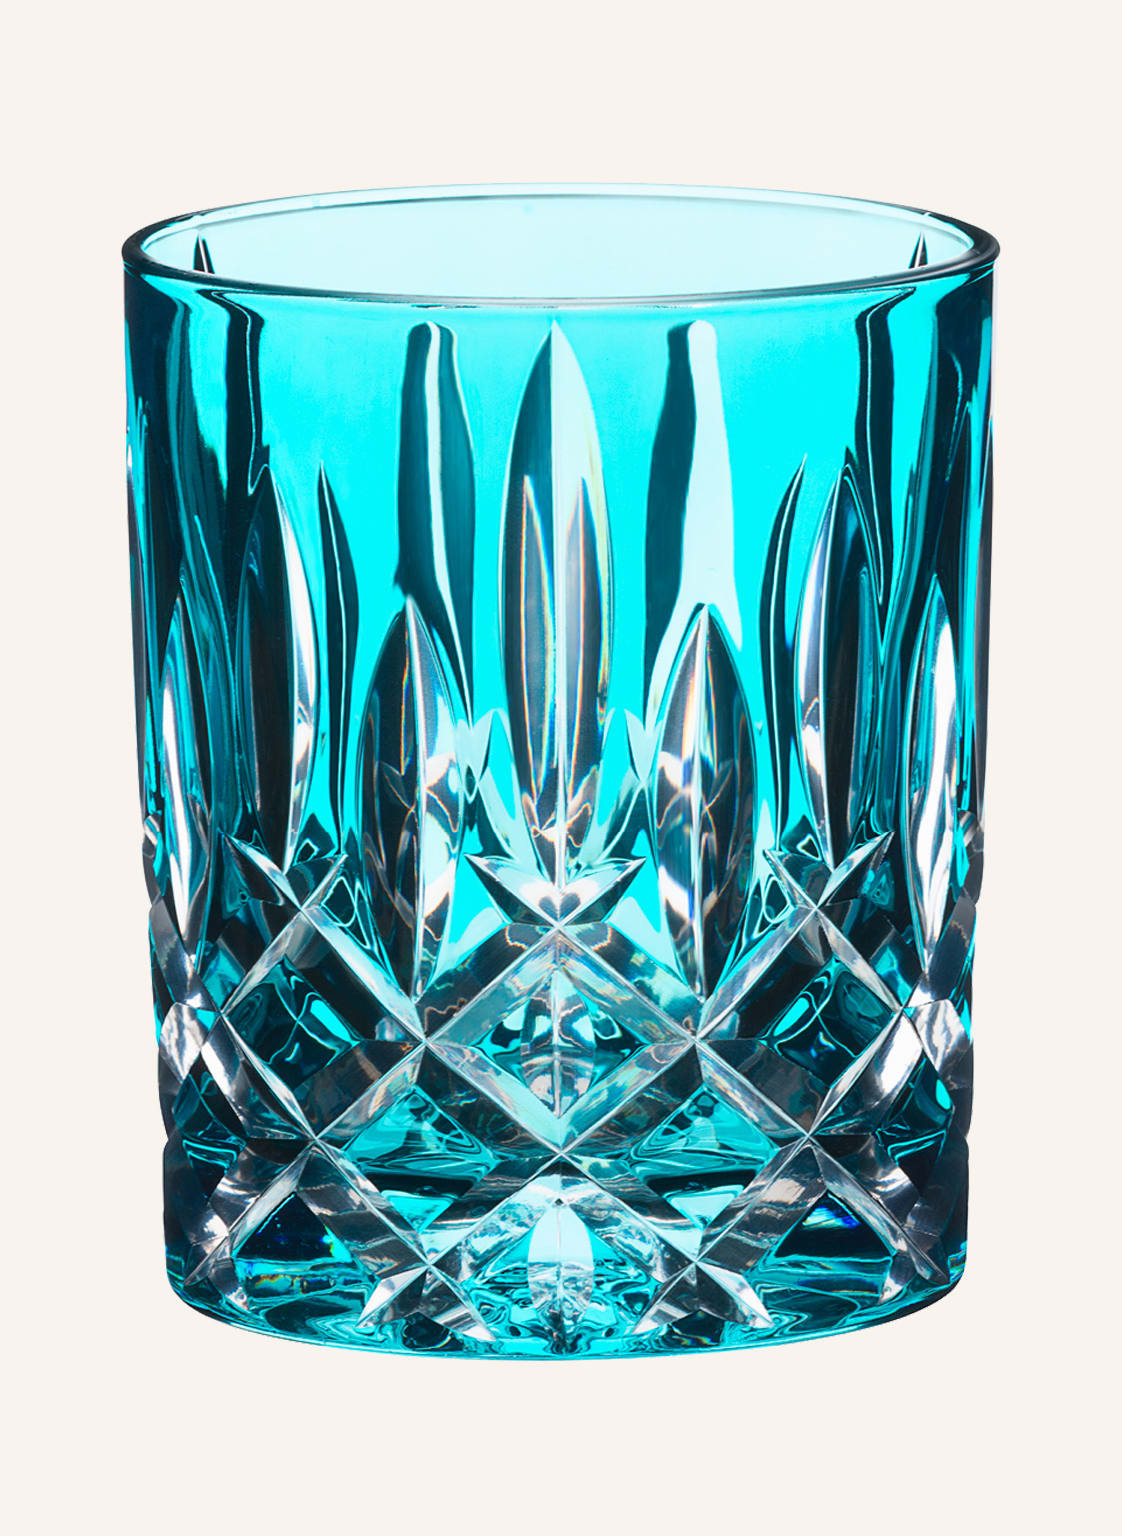 Riedel Whiskyglas Laudon Türkis blau von Riedel